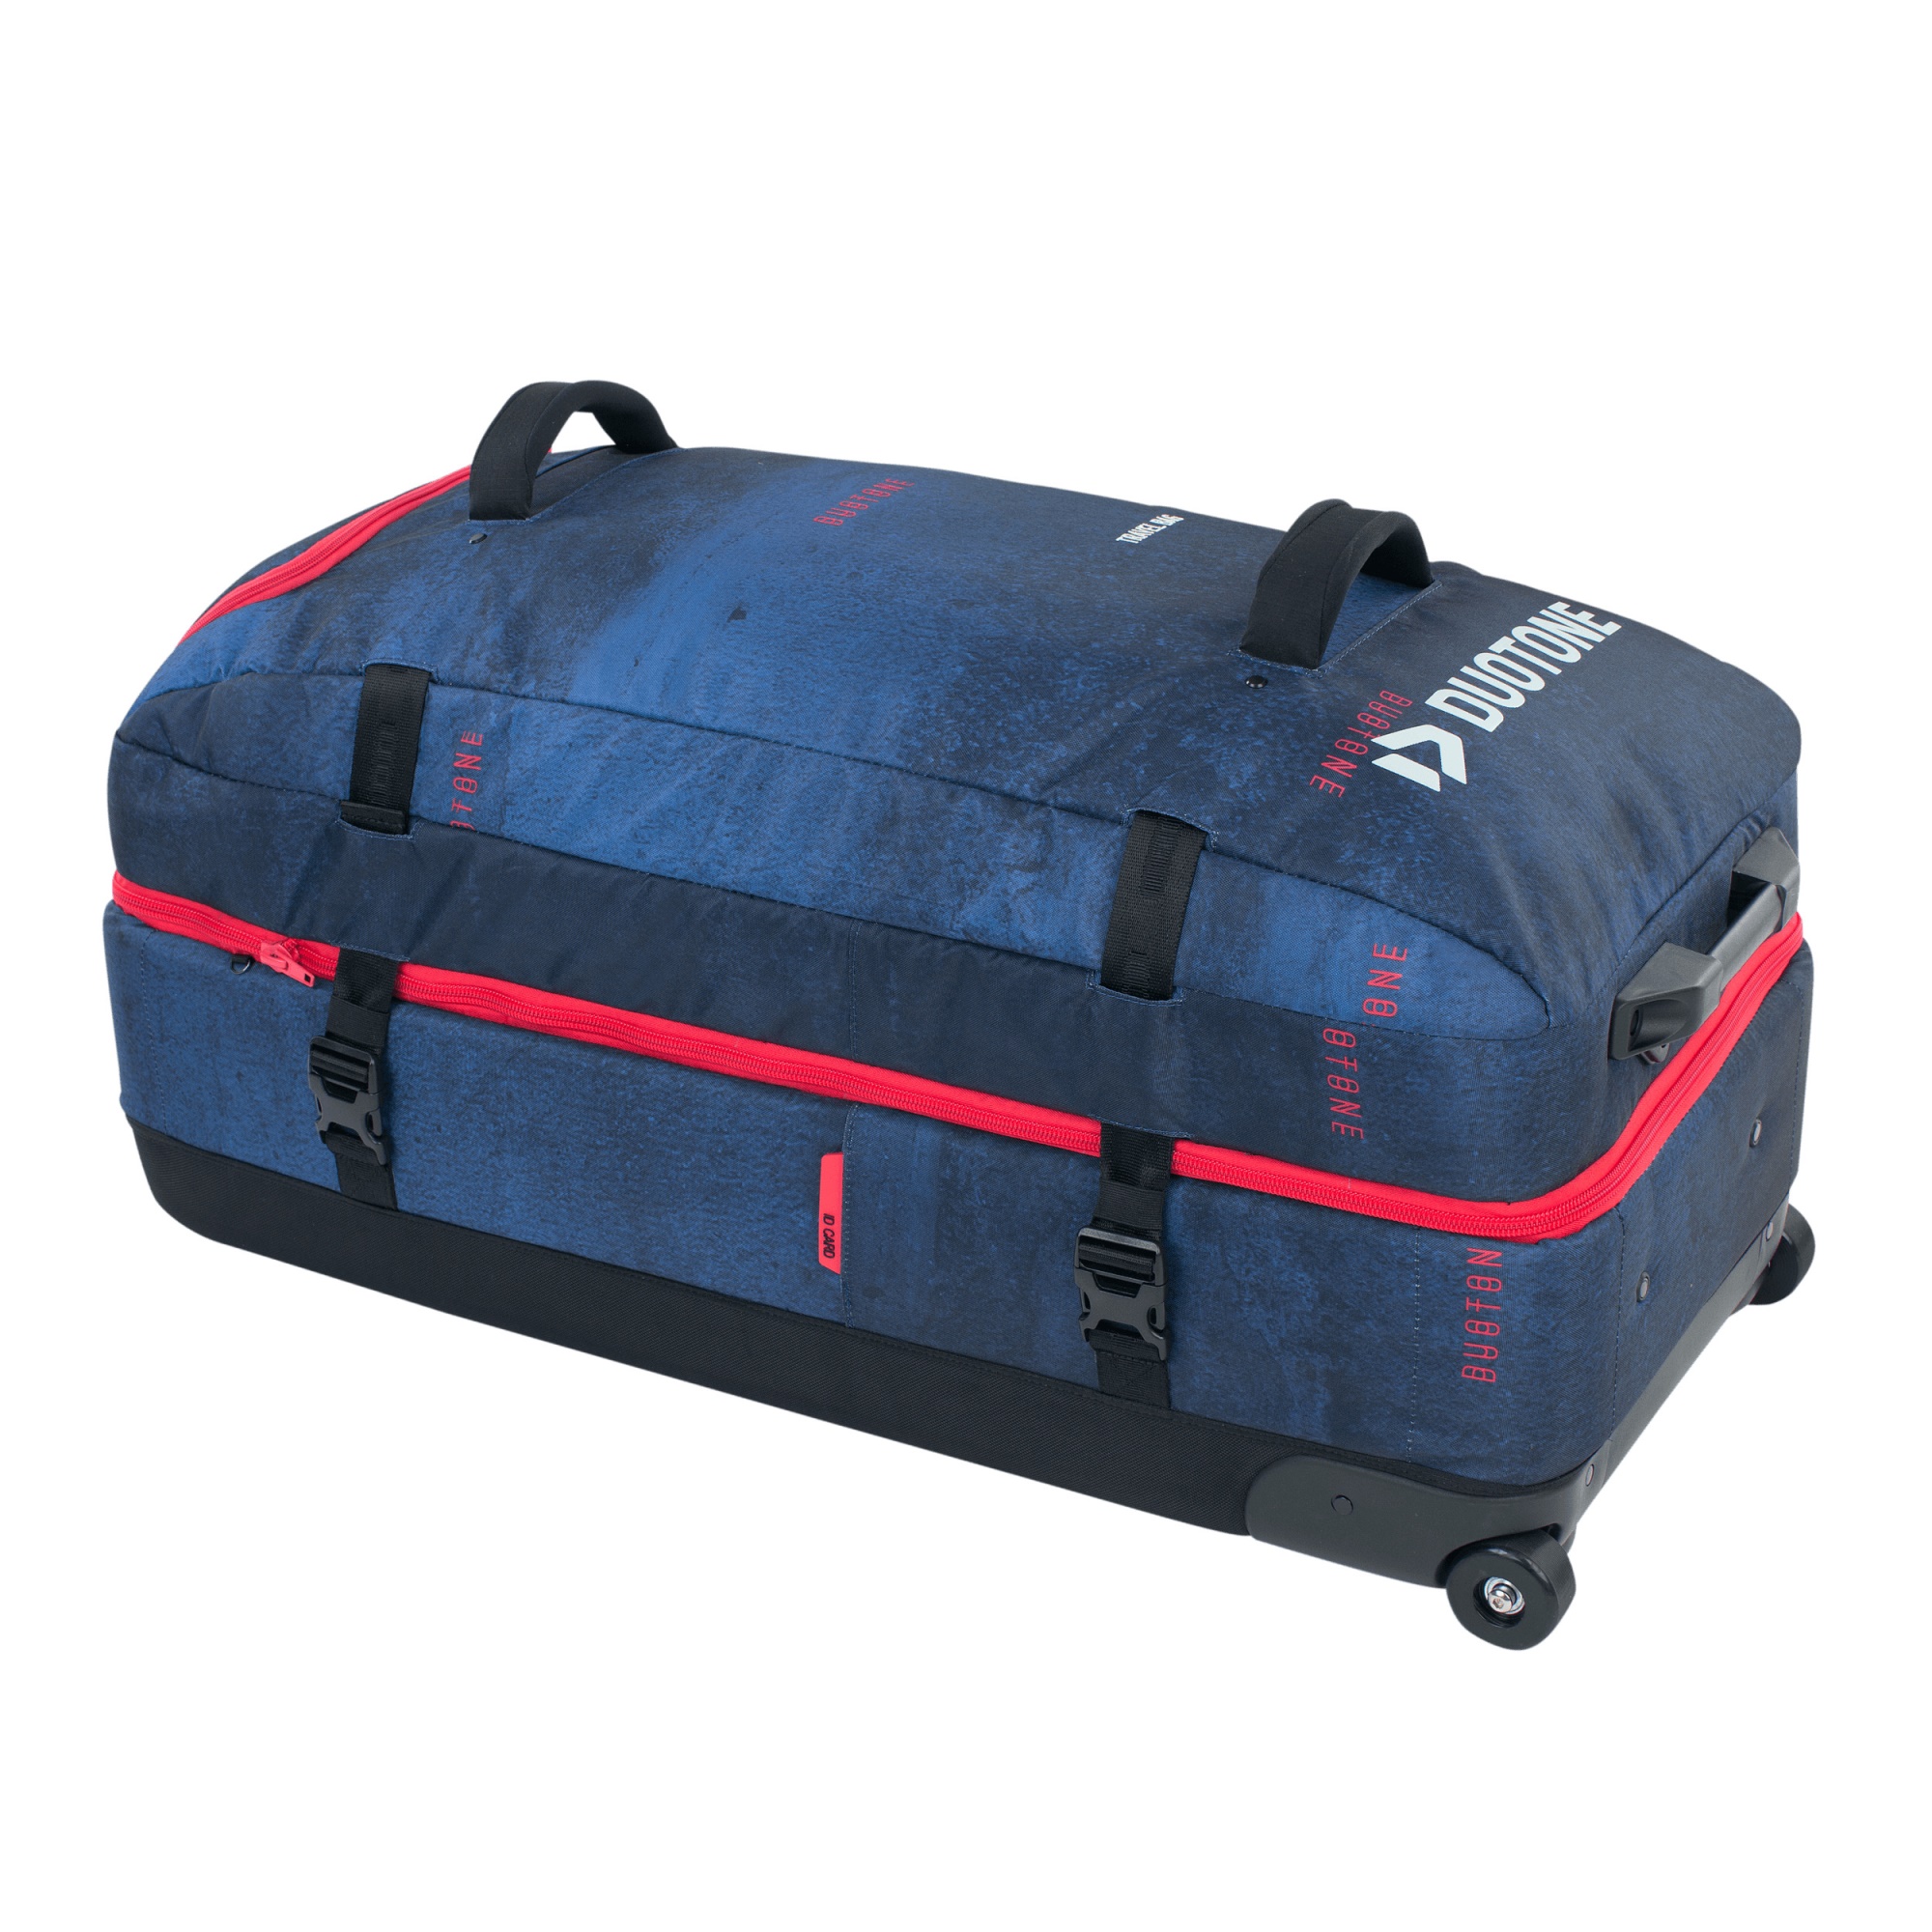 DUOTONE Сумка Travelgear Travelbag (44220-7000) с.синий 22-ZM000008150